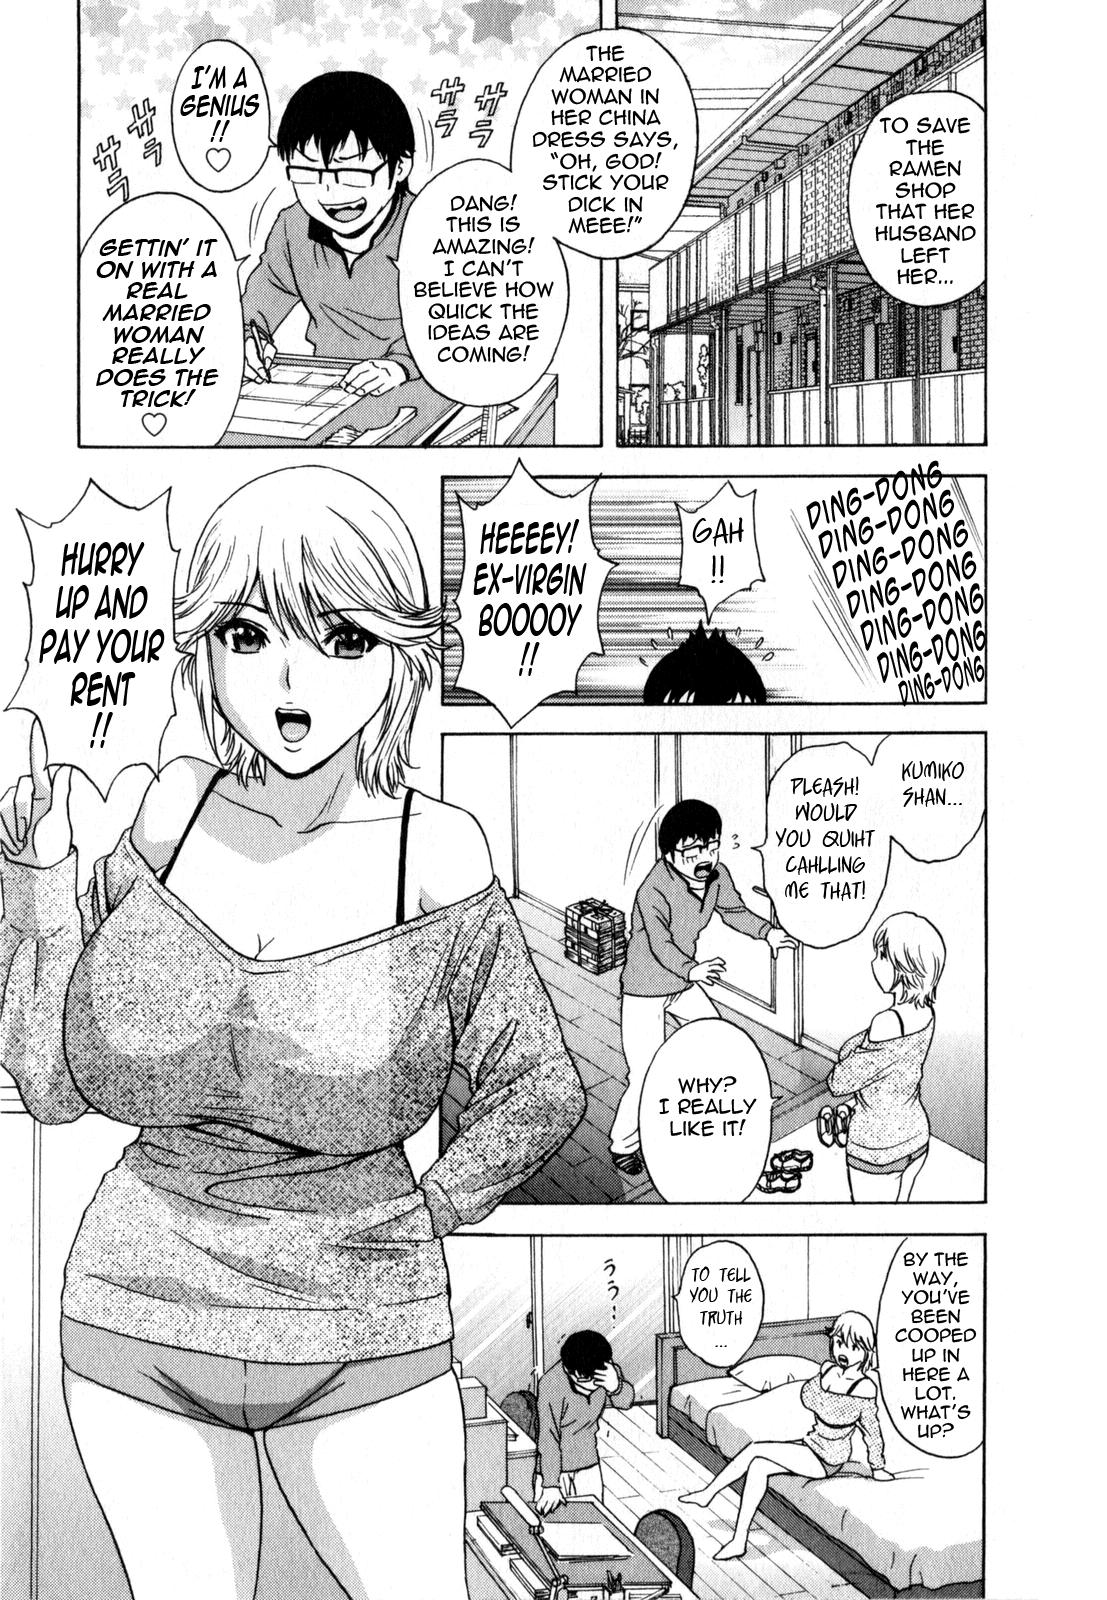 [Hidemaru] Life with Married Women Just Like a Manga 2 - Ch. 1-4 [English] {Tadanohito} 58